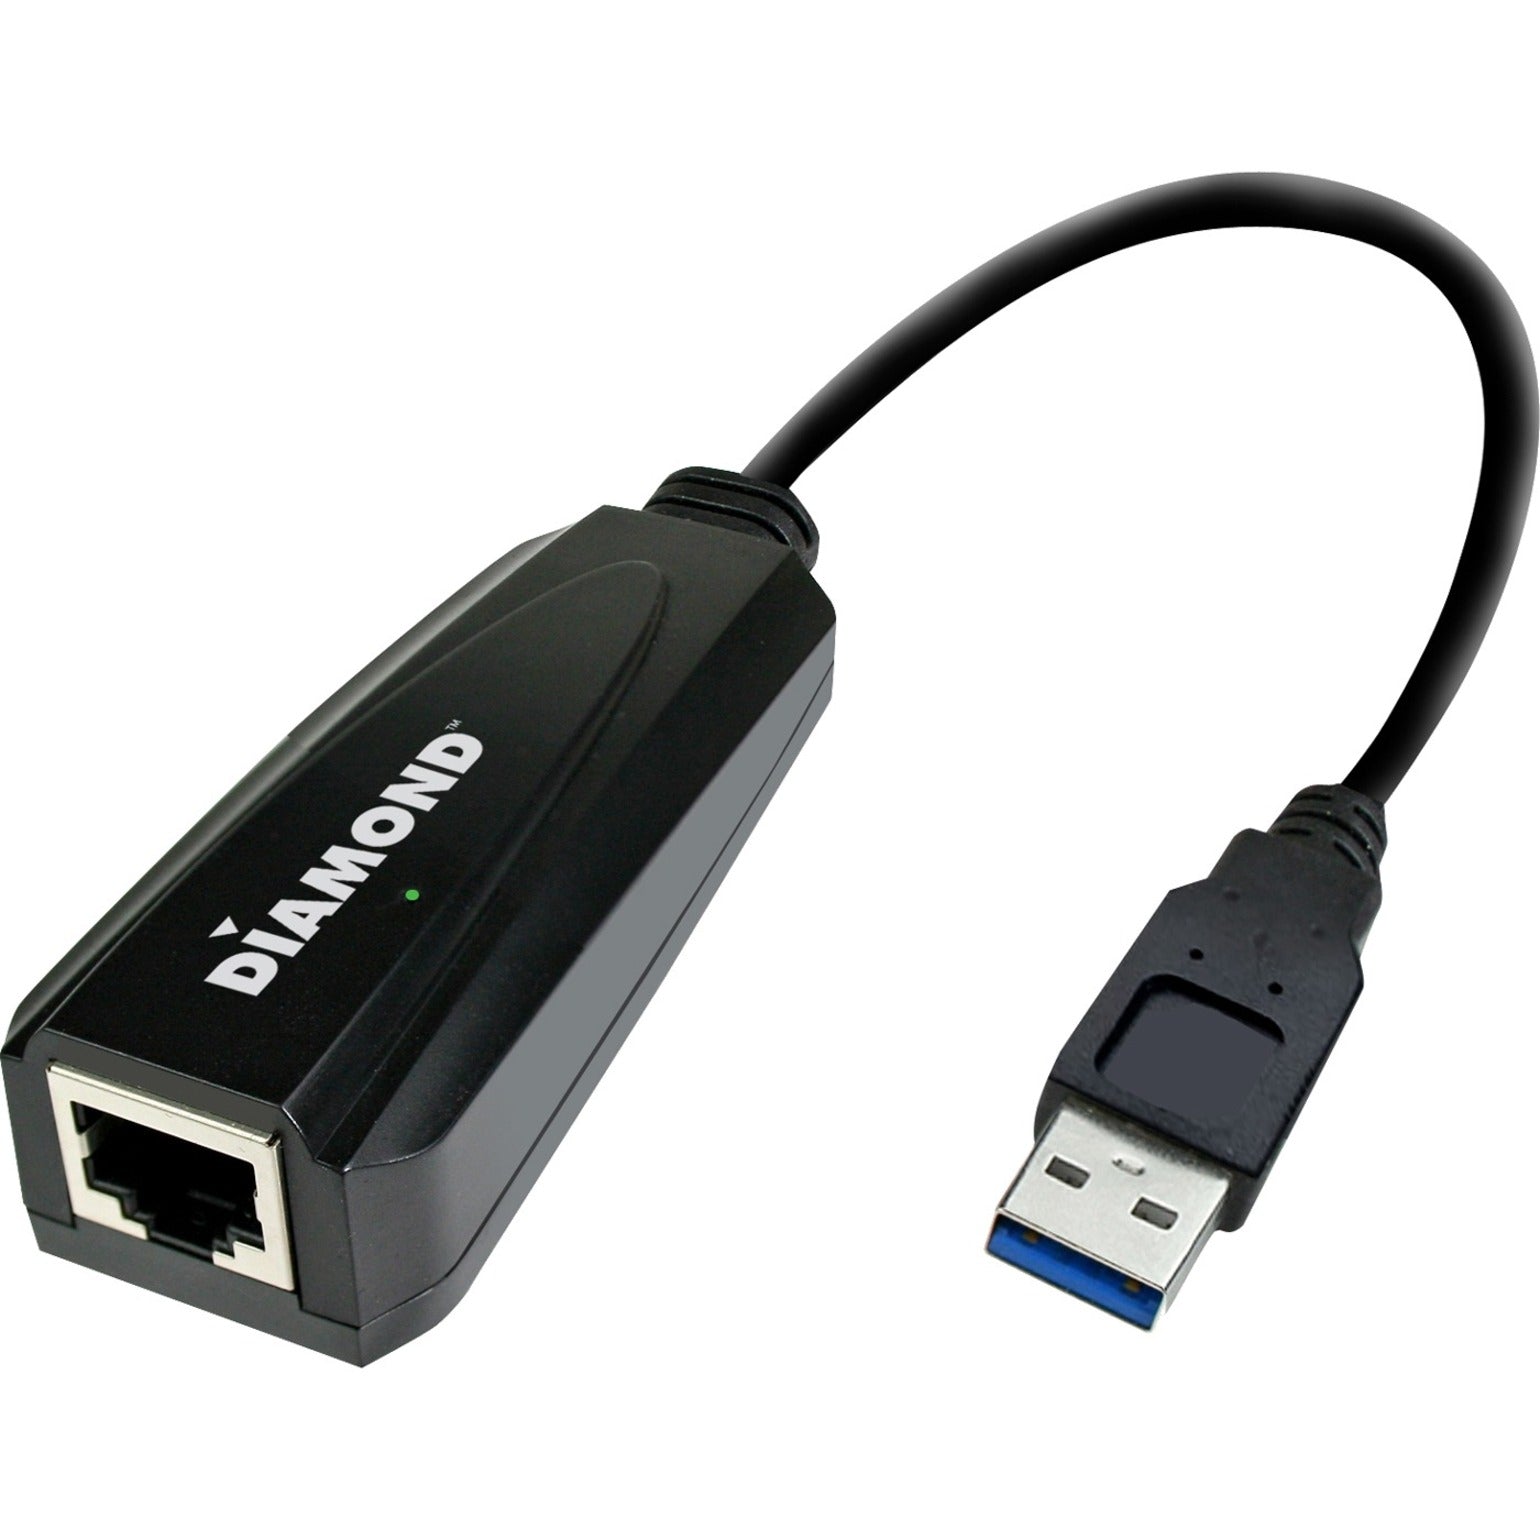 DIAMOND UE3000 USB3.0 Gigabit Ethernet Adapter, USB to RJ45, for Windows 10, 8.1, 8, 7, Mac OS, Linux OS and Chrome OS [Discontinued]